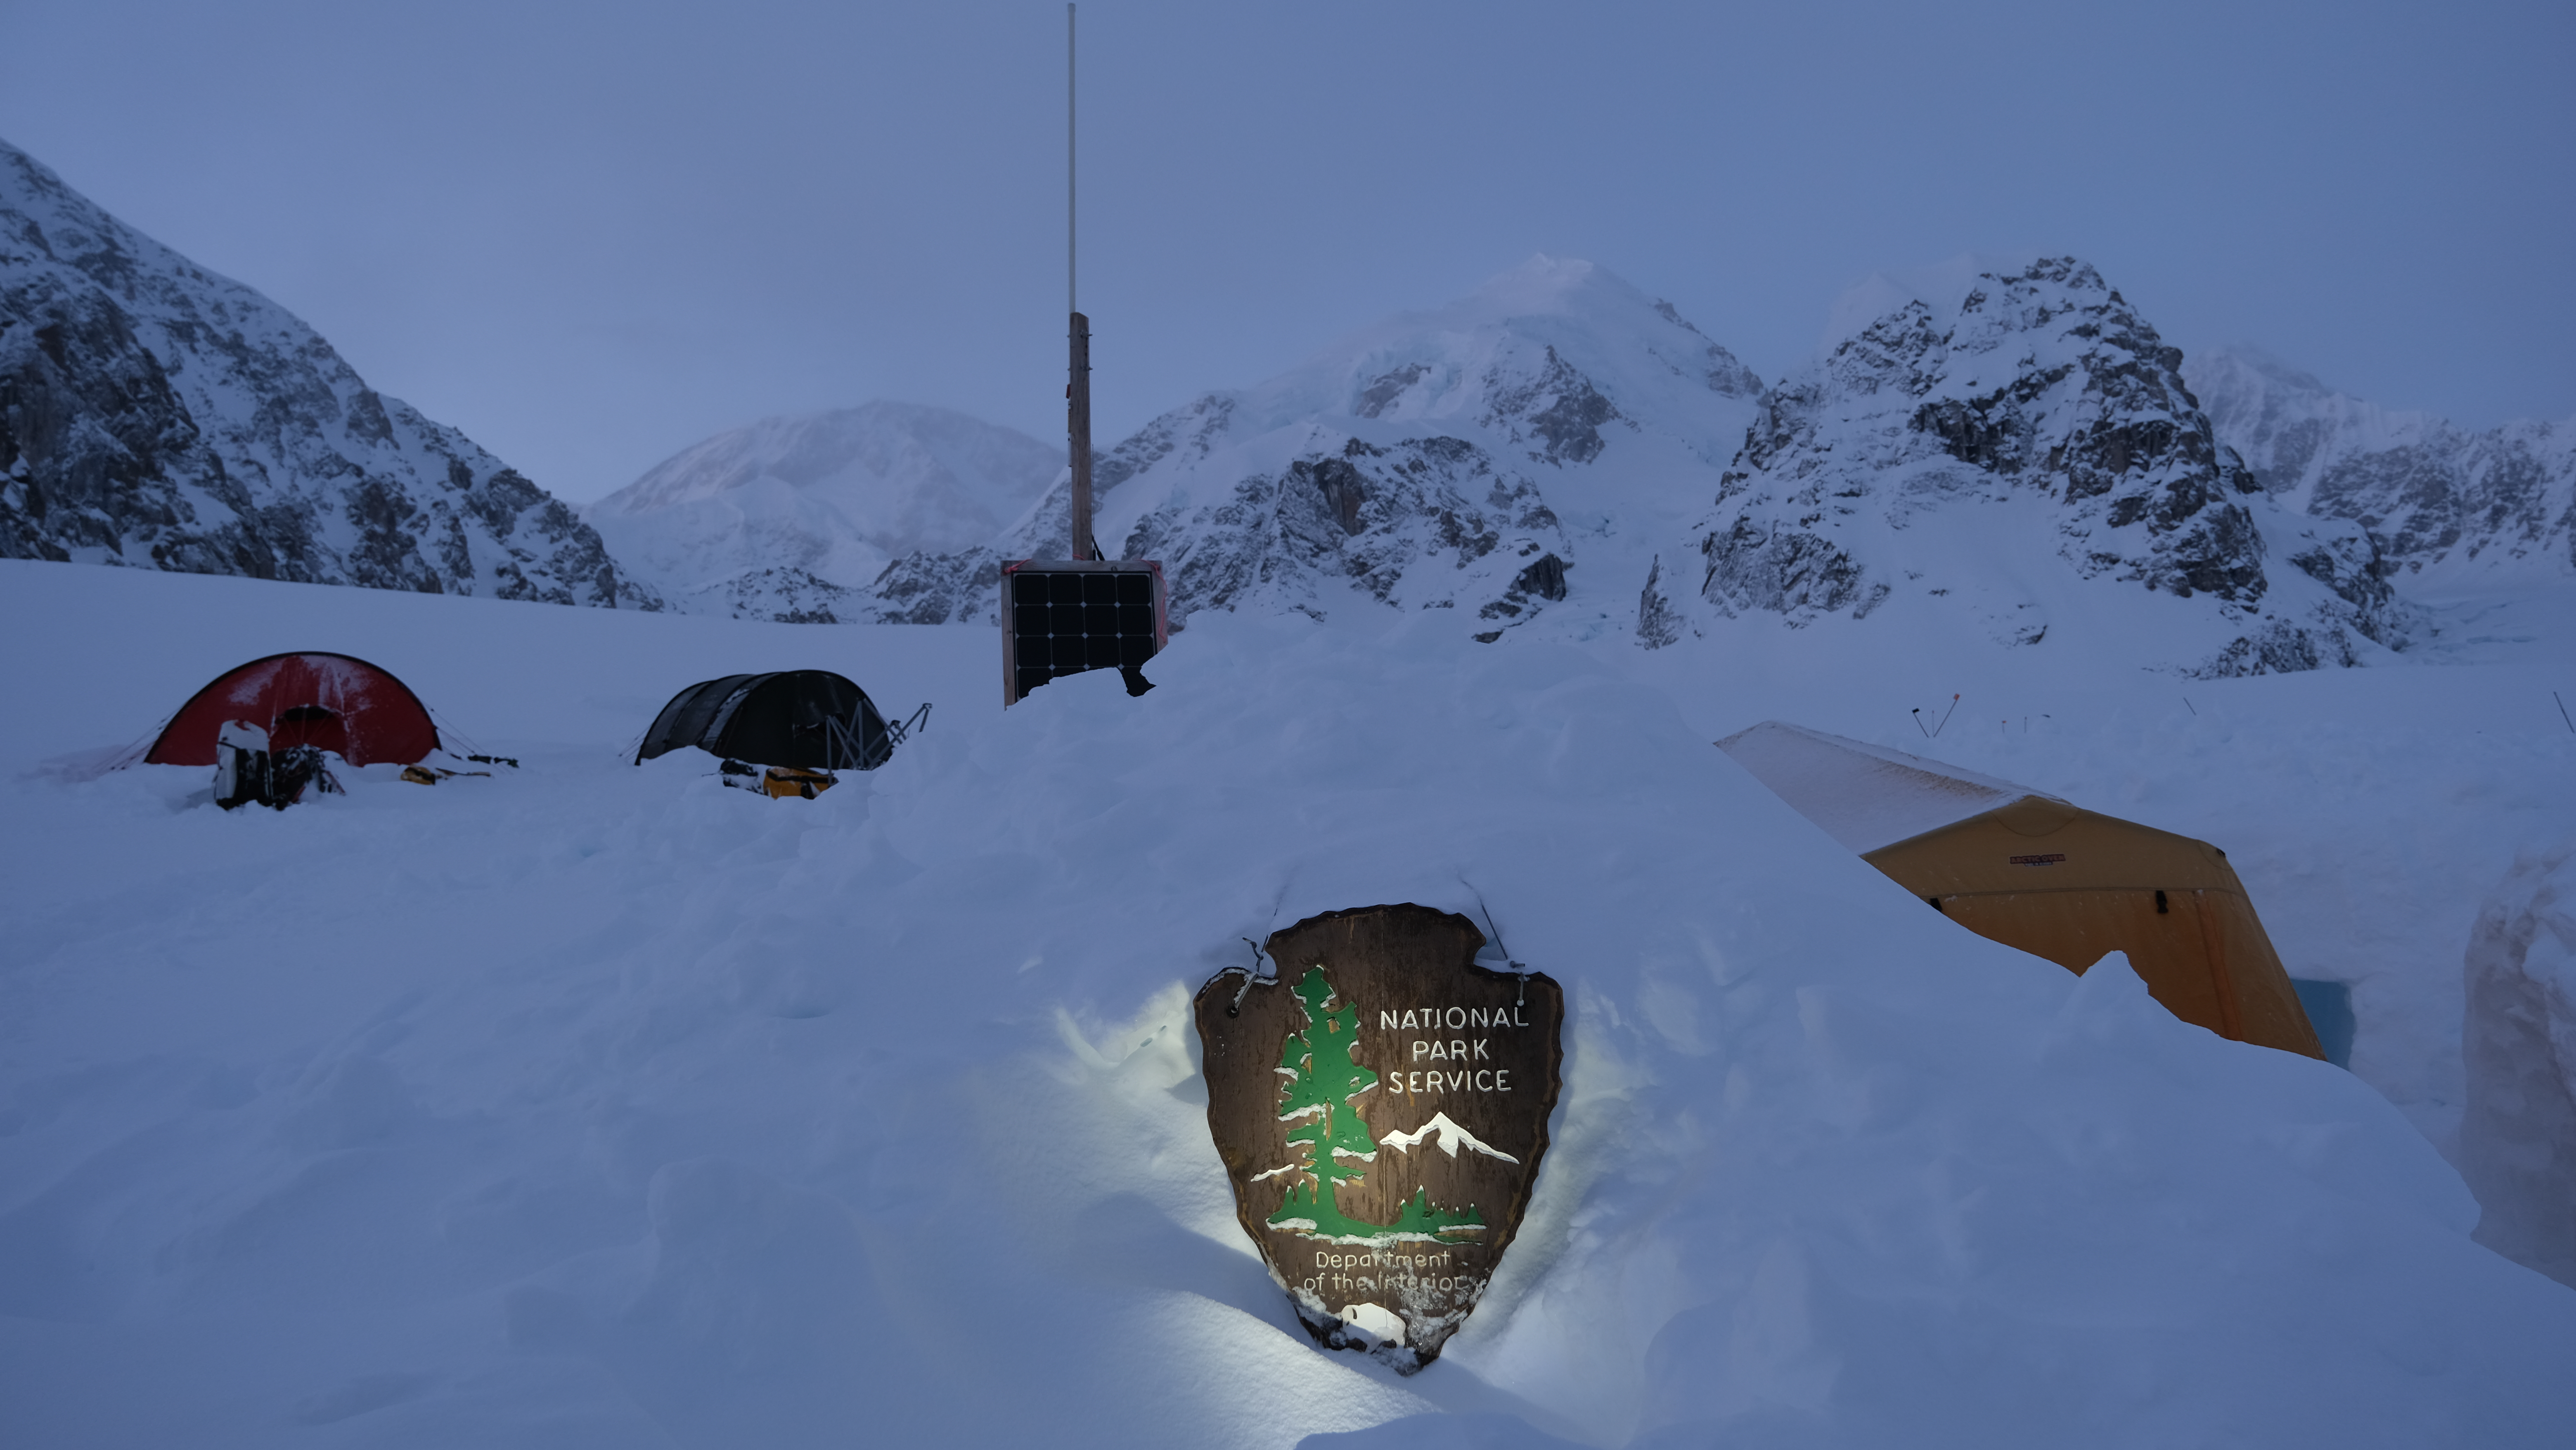 An NPS arrowhead sign is illuminated at a glacier encampment at dusk